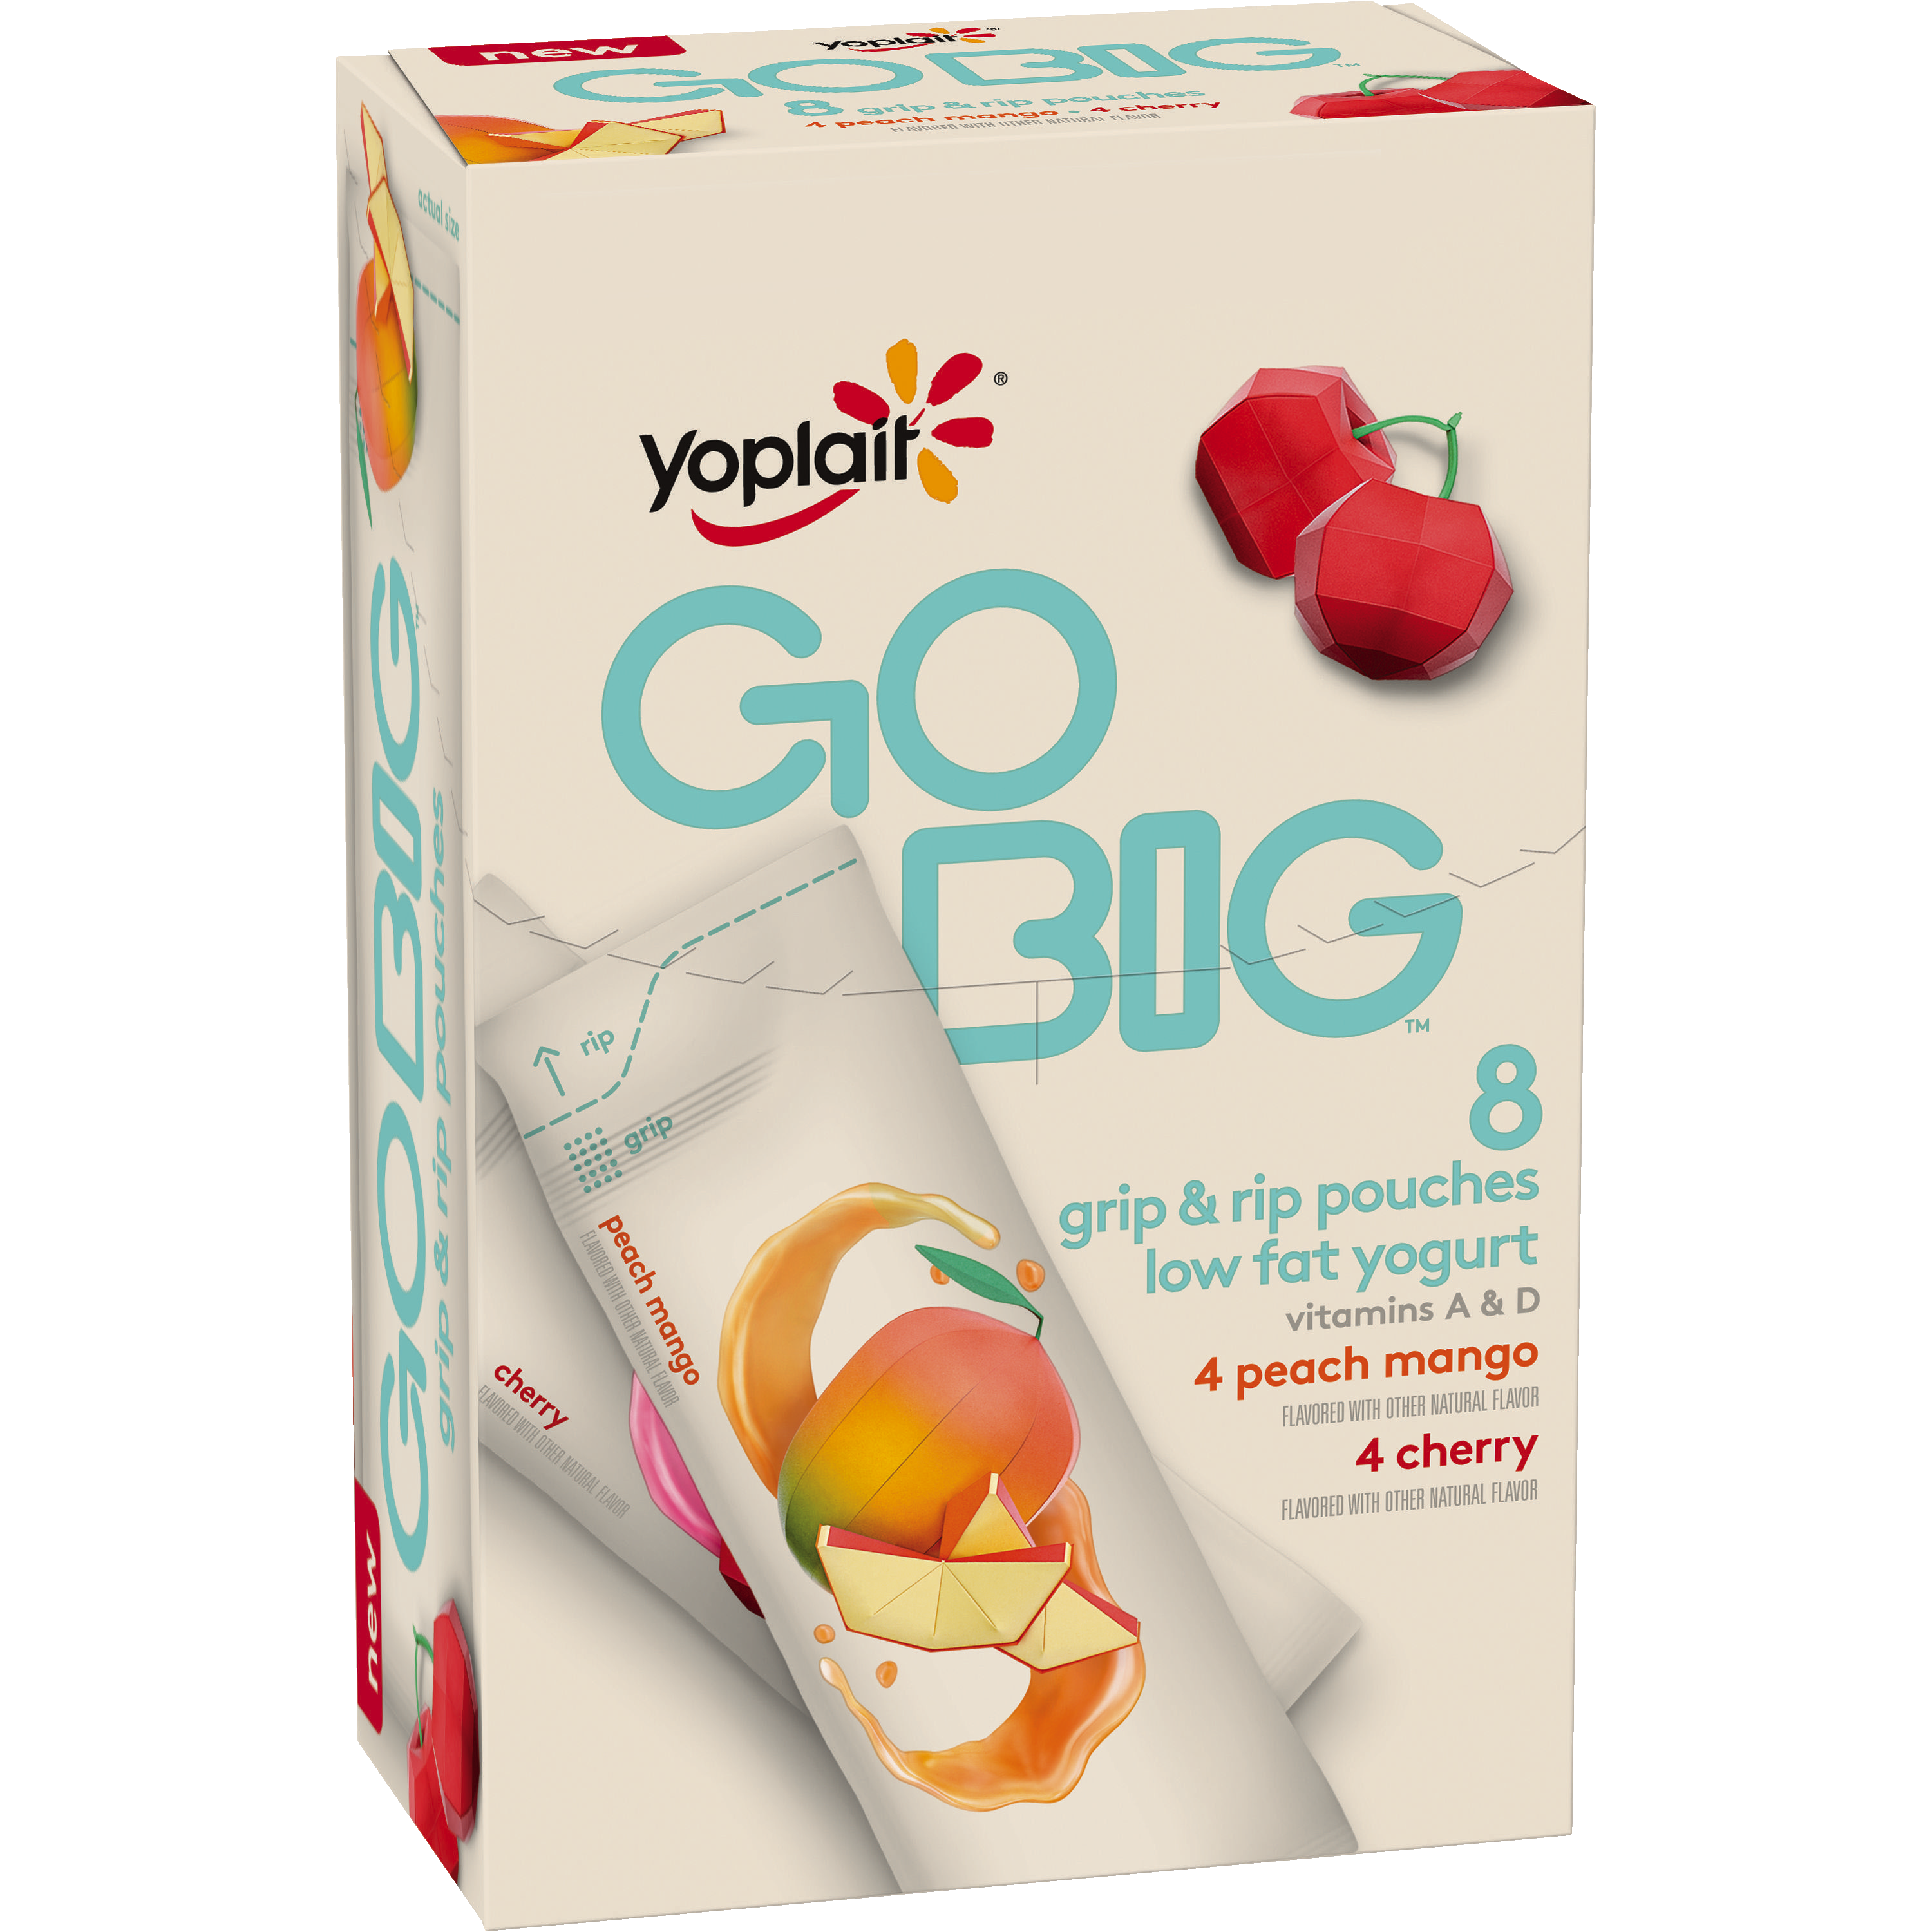 Yoplait Go Big yogurt